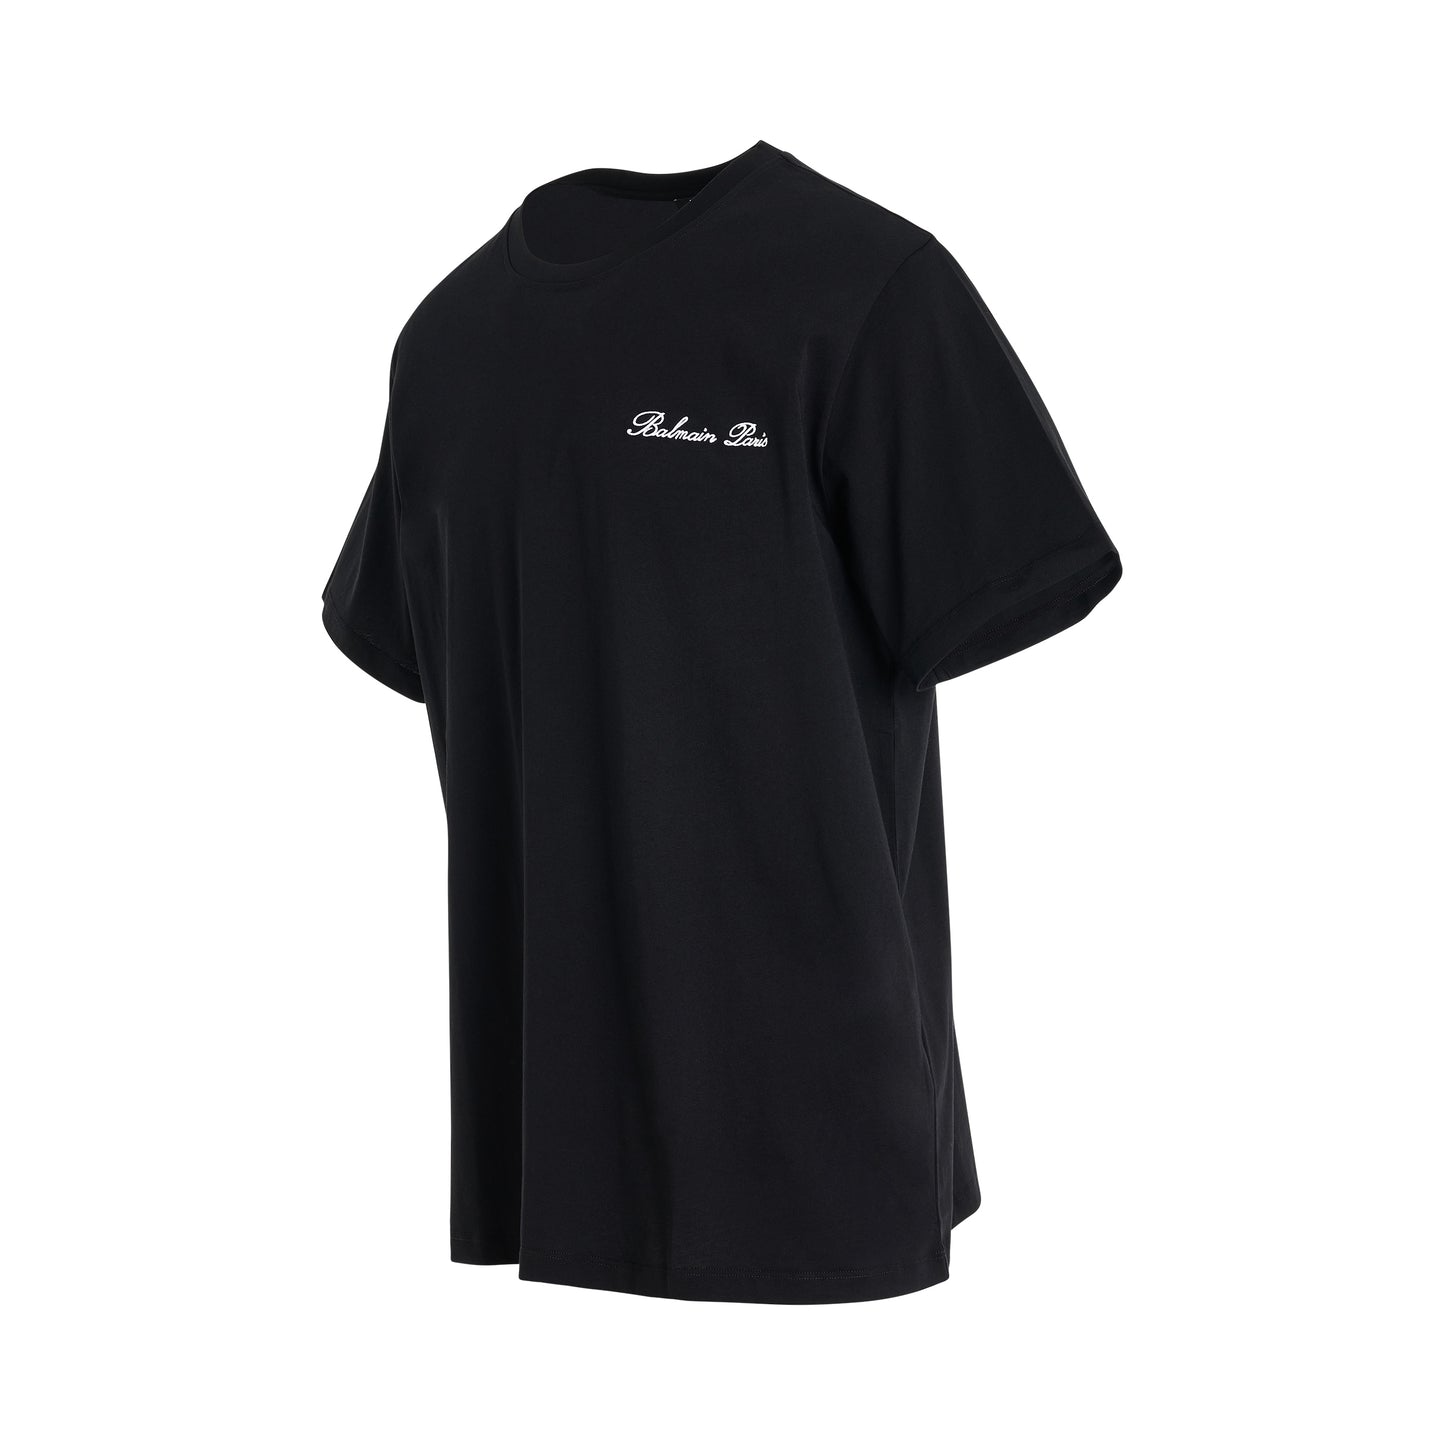 Balmain Signature Embroidery T-Shirt in Black/White